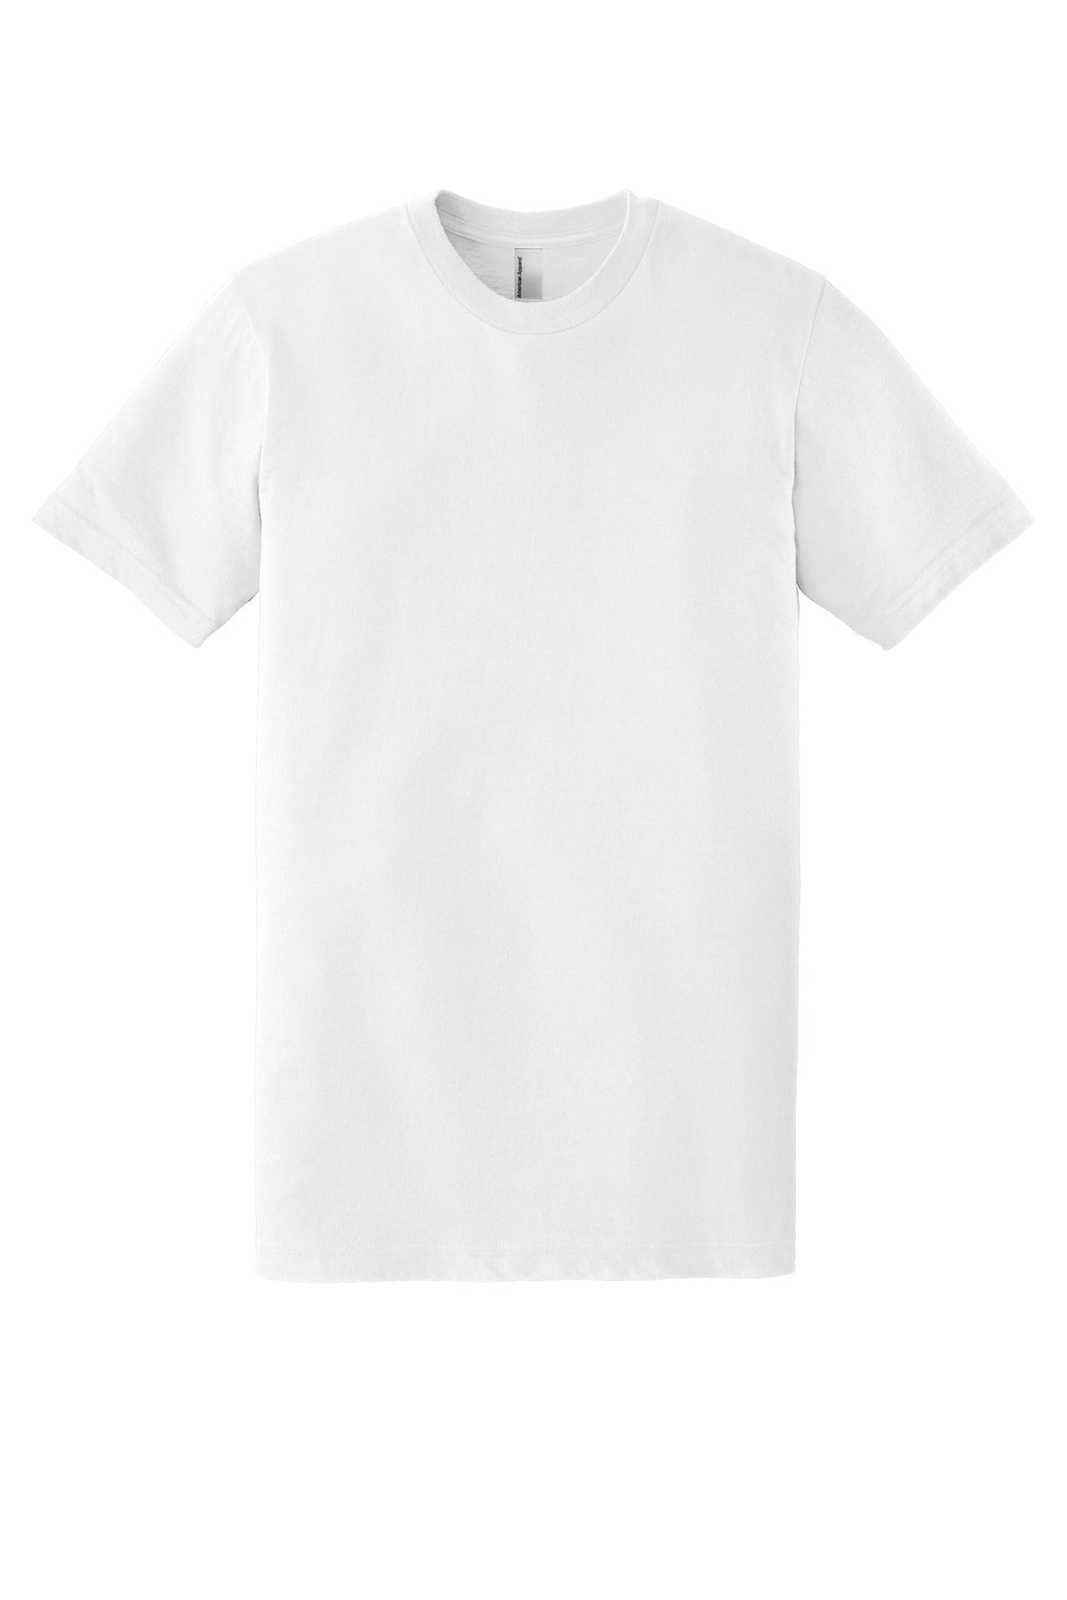 American Apparel 2001W Fine Jersey T-Shirt - White - HIT a Double